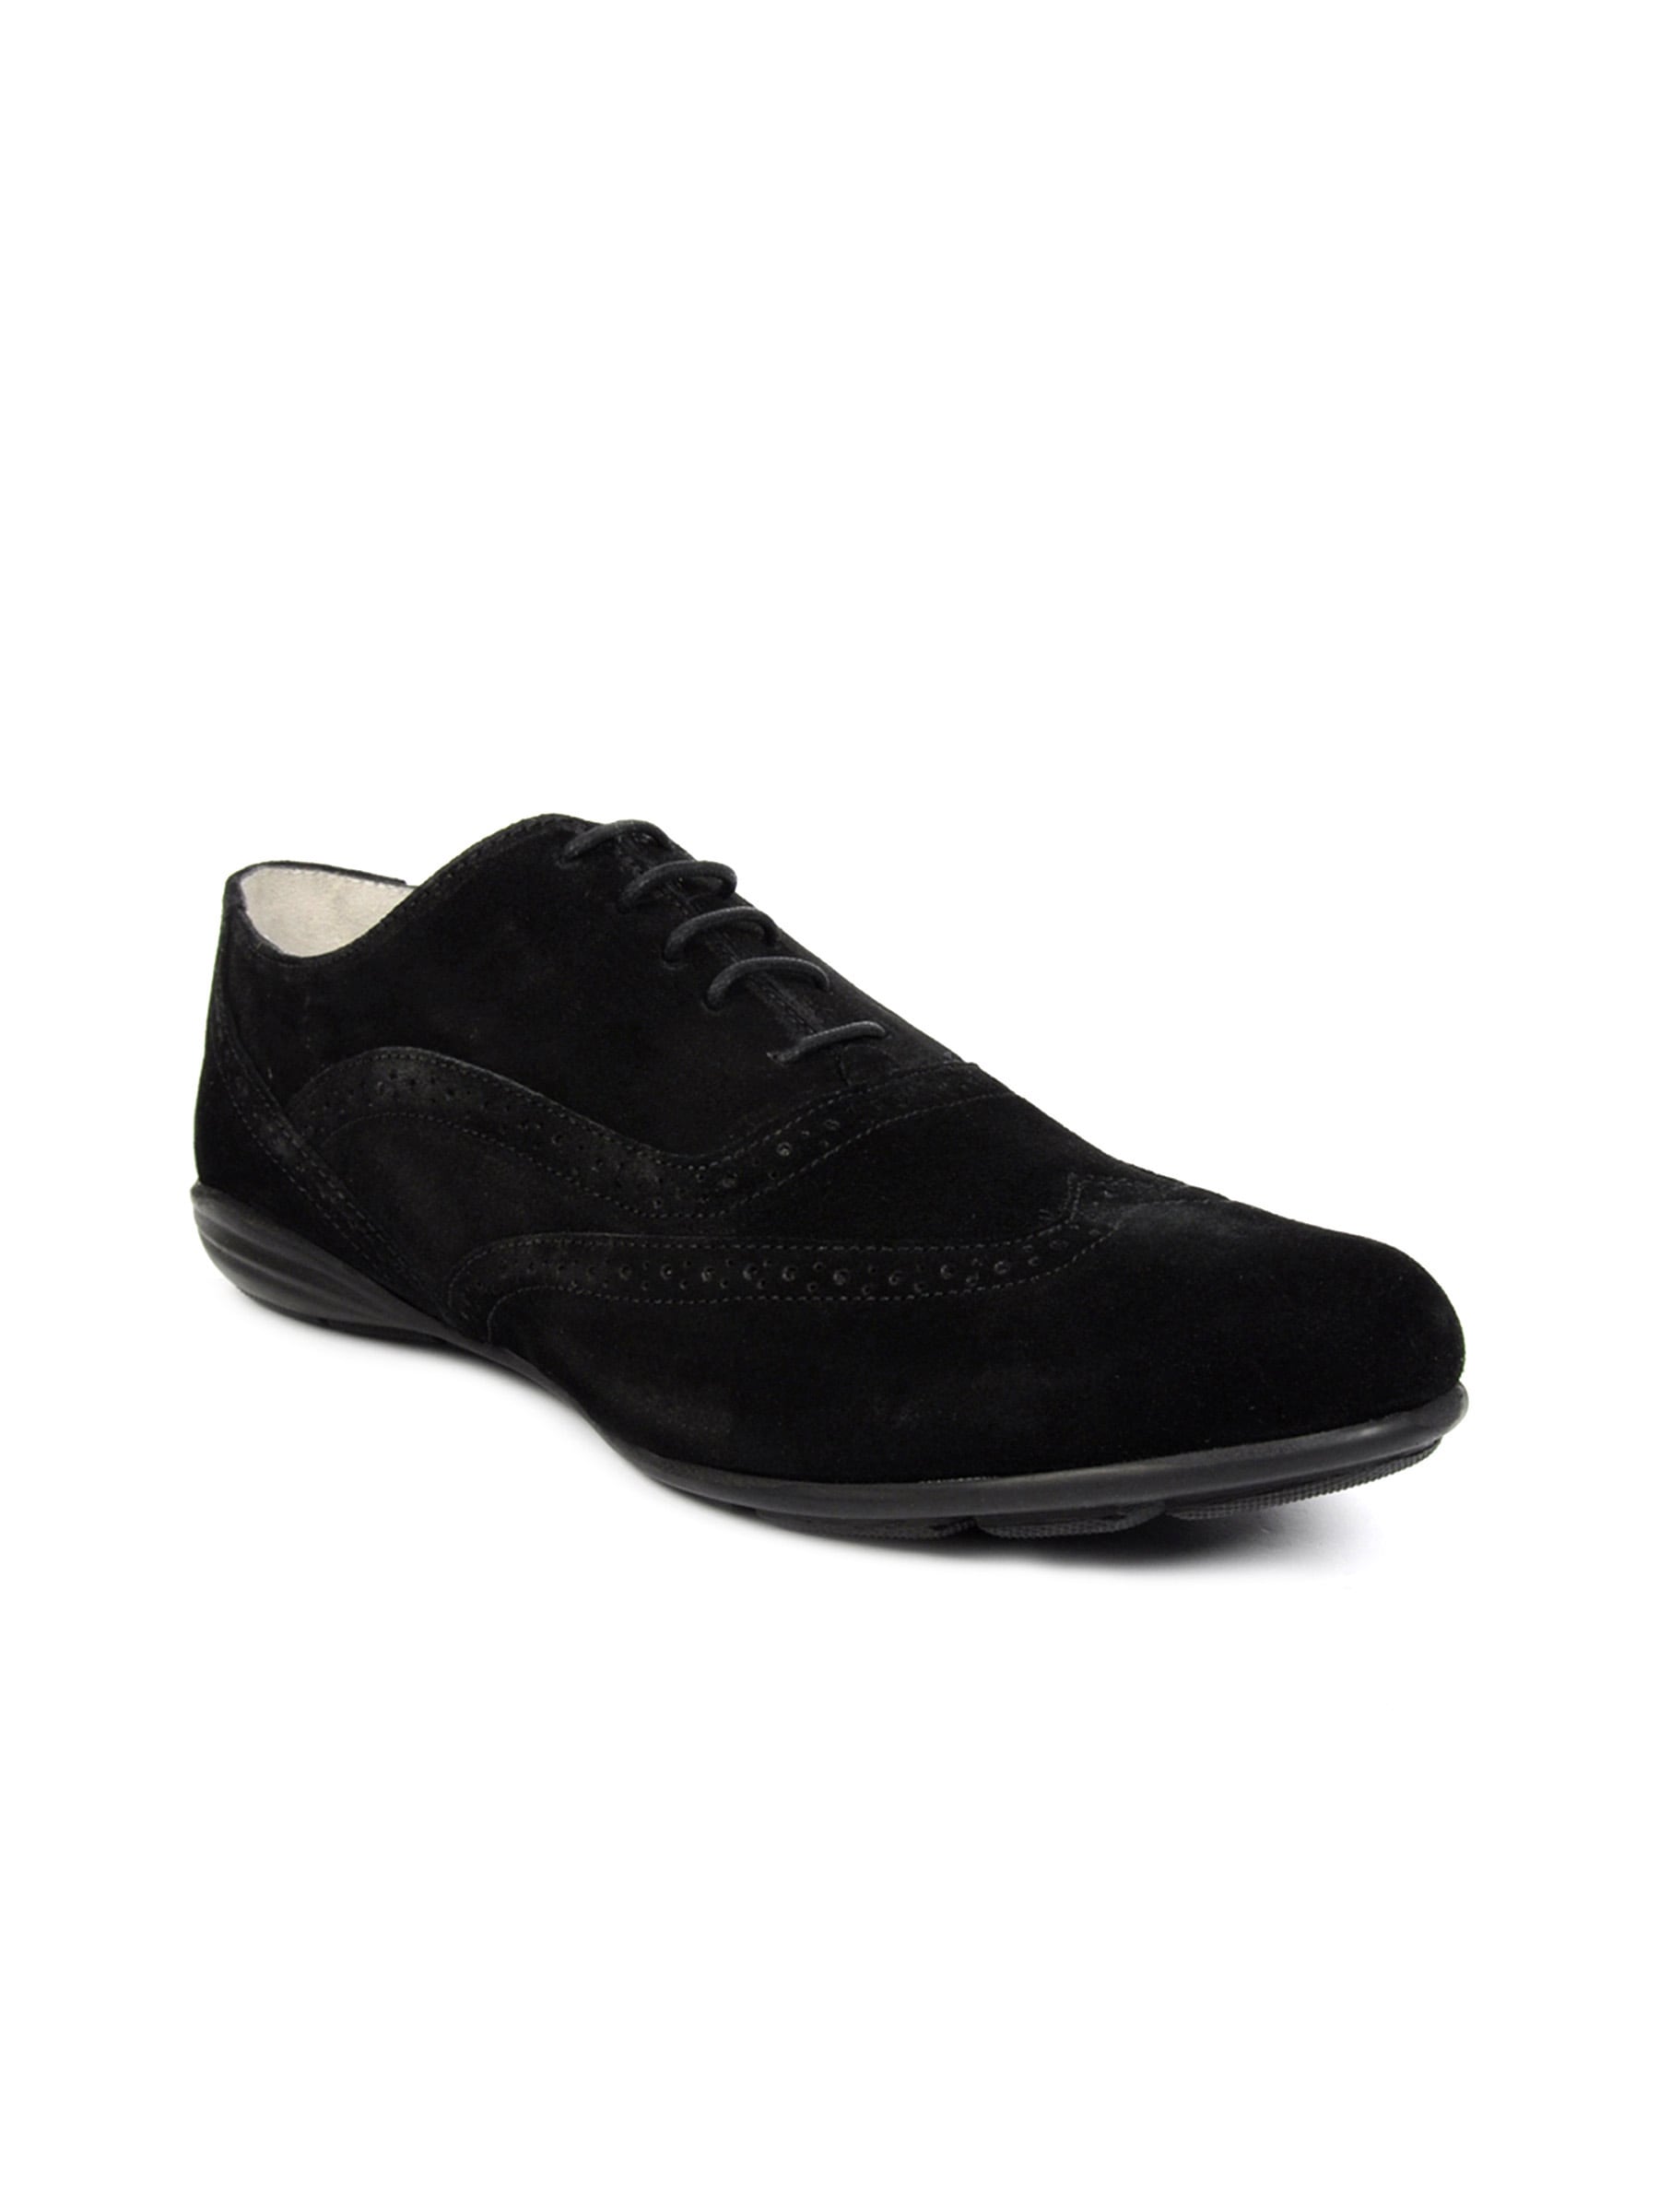 Carlton London Men Semi oxfords Black Casual Shoes